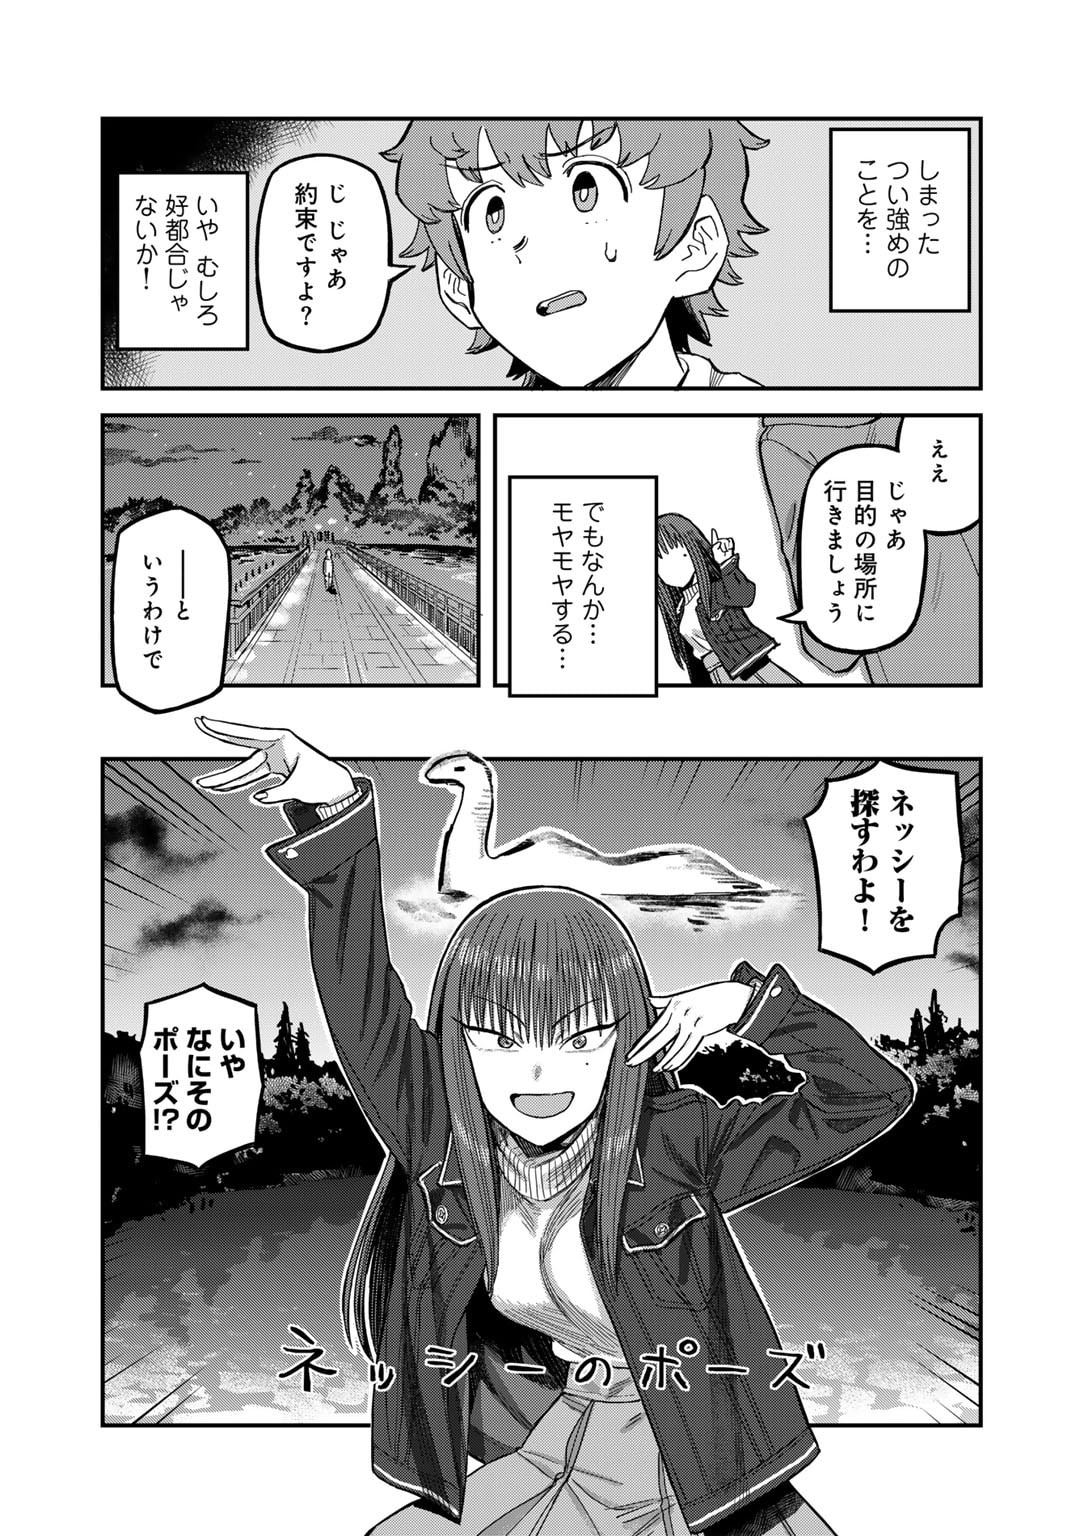 Kurono-san wa Occult ga Suki! - Chapter 5 - Page 11